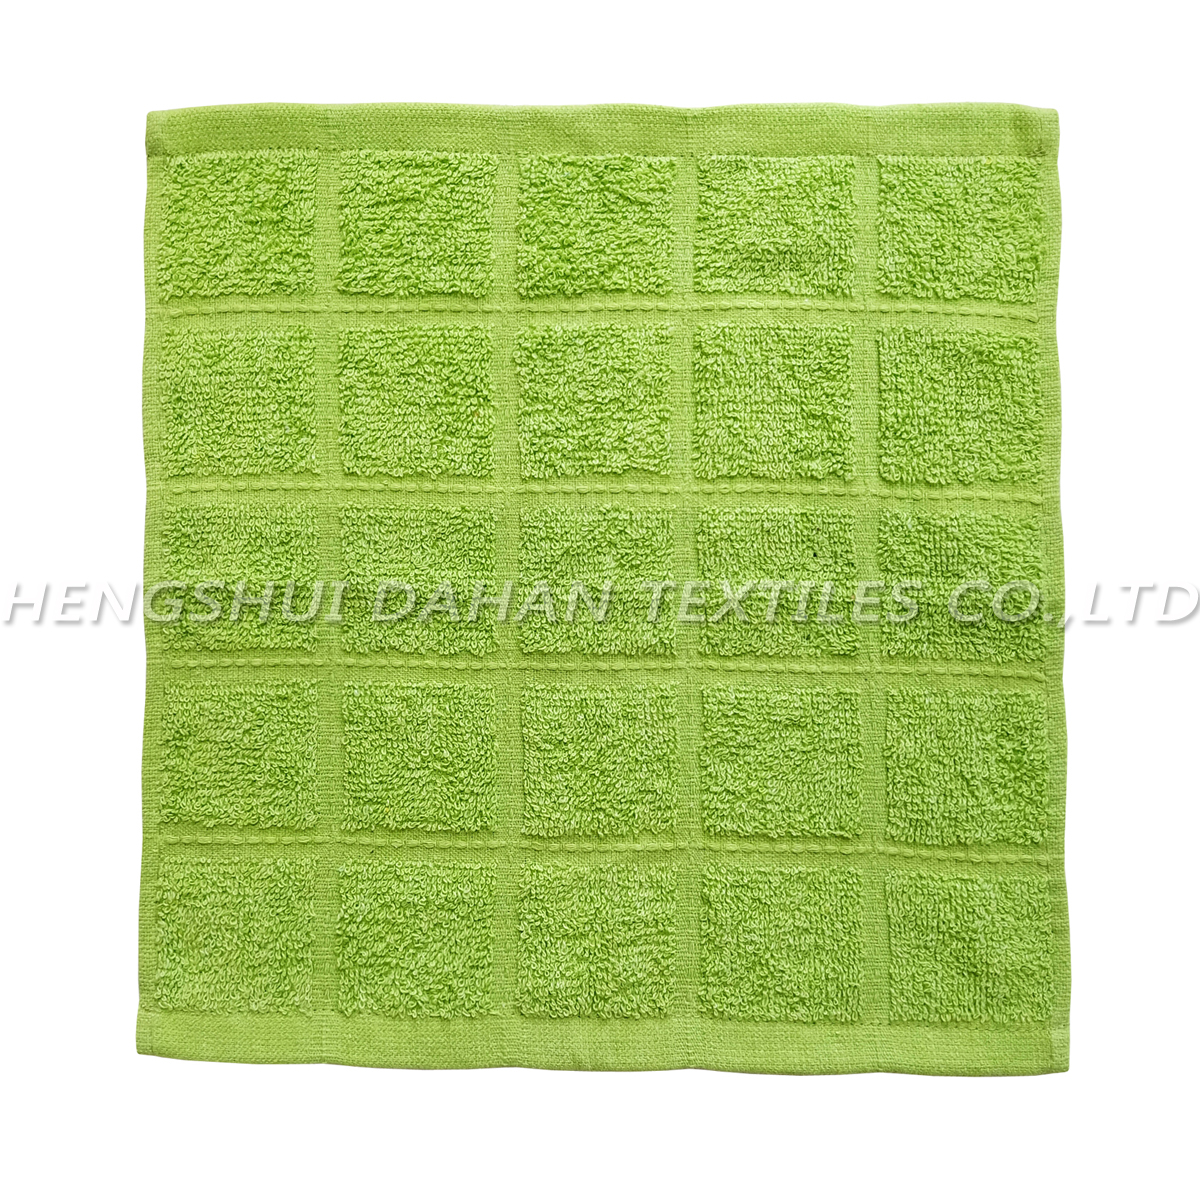 407CR Cotton colorful dish cloth, kitchen towel.